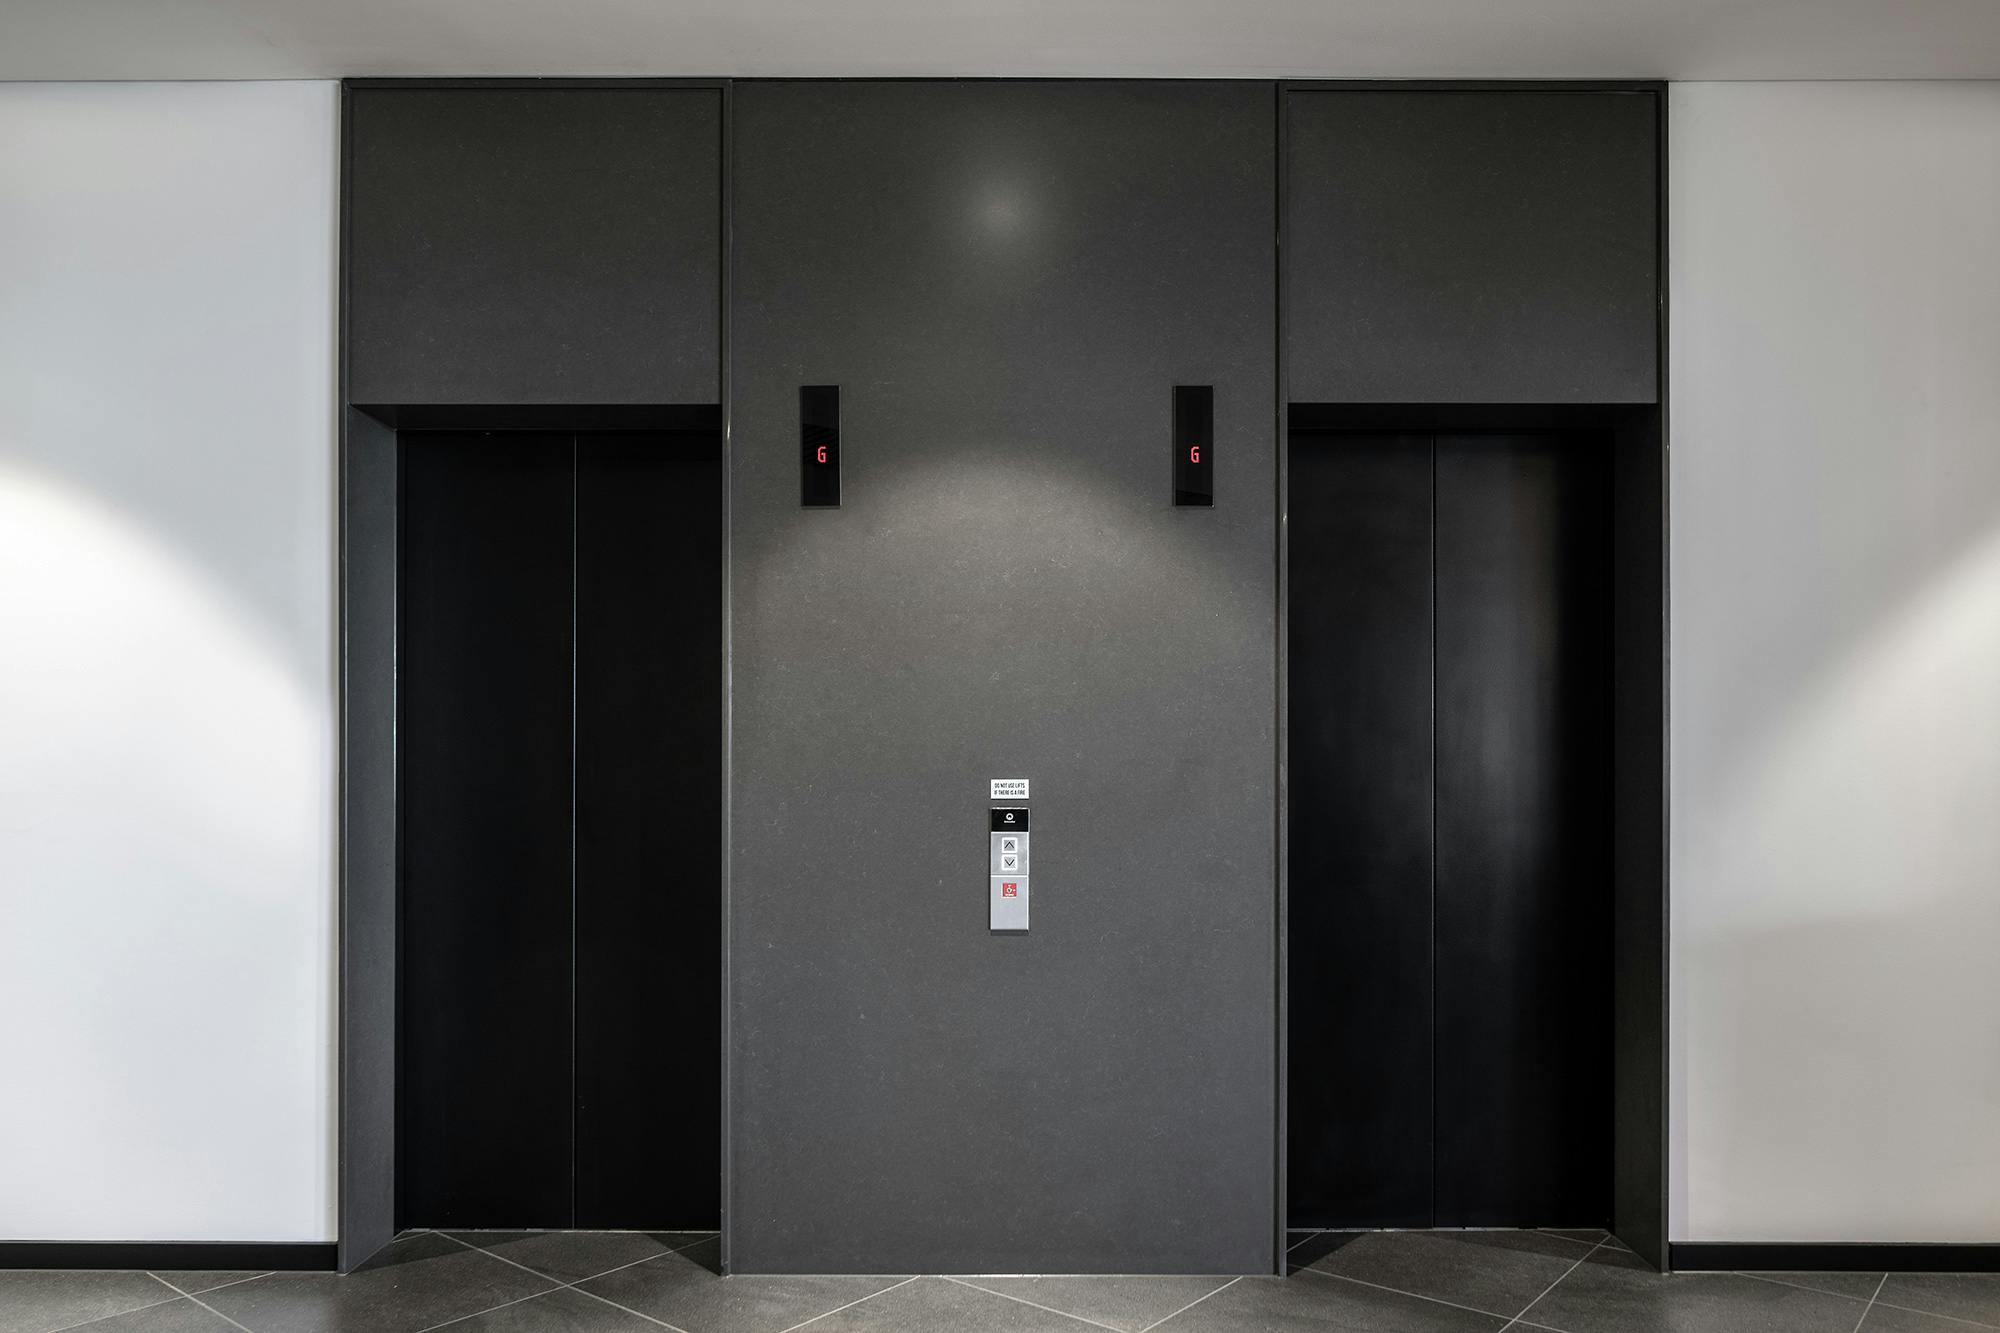 Numéro d'image 63 de la section actuelle de A luxurious rental building chooses Cosentino for its durability, elegance and sustainability de Cosentino France